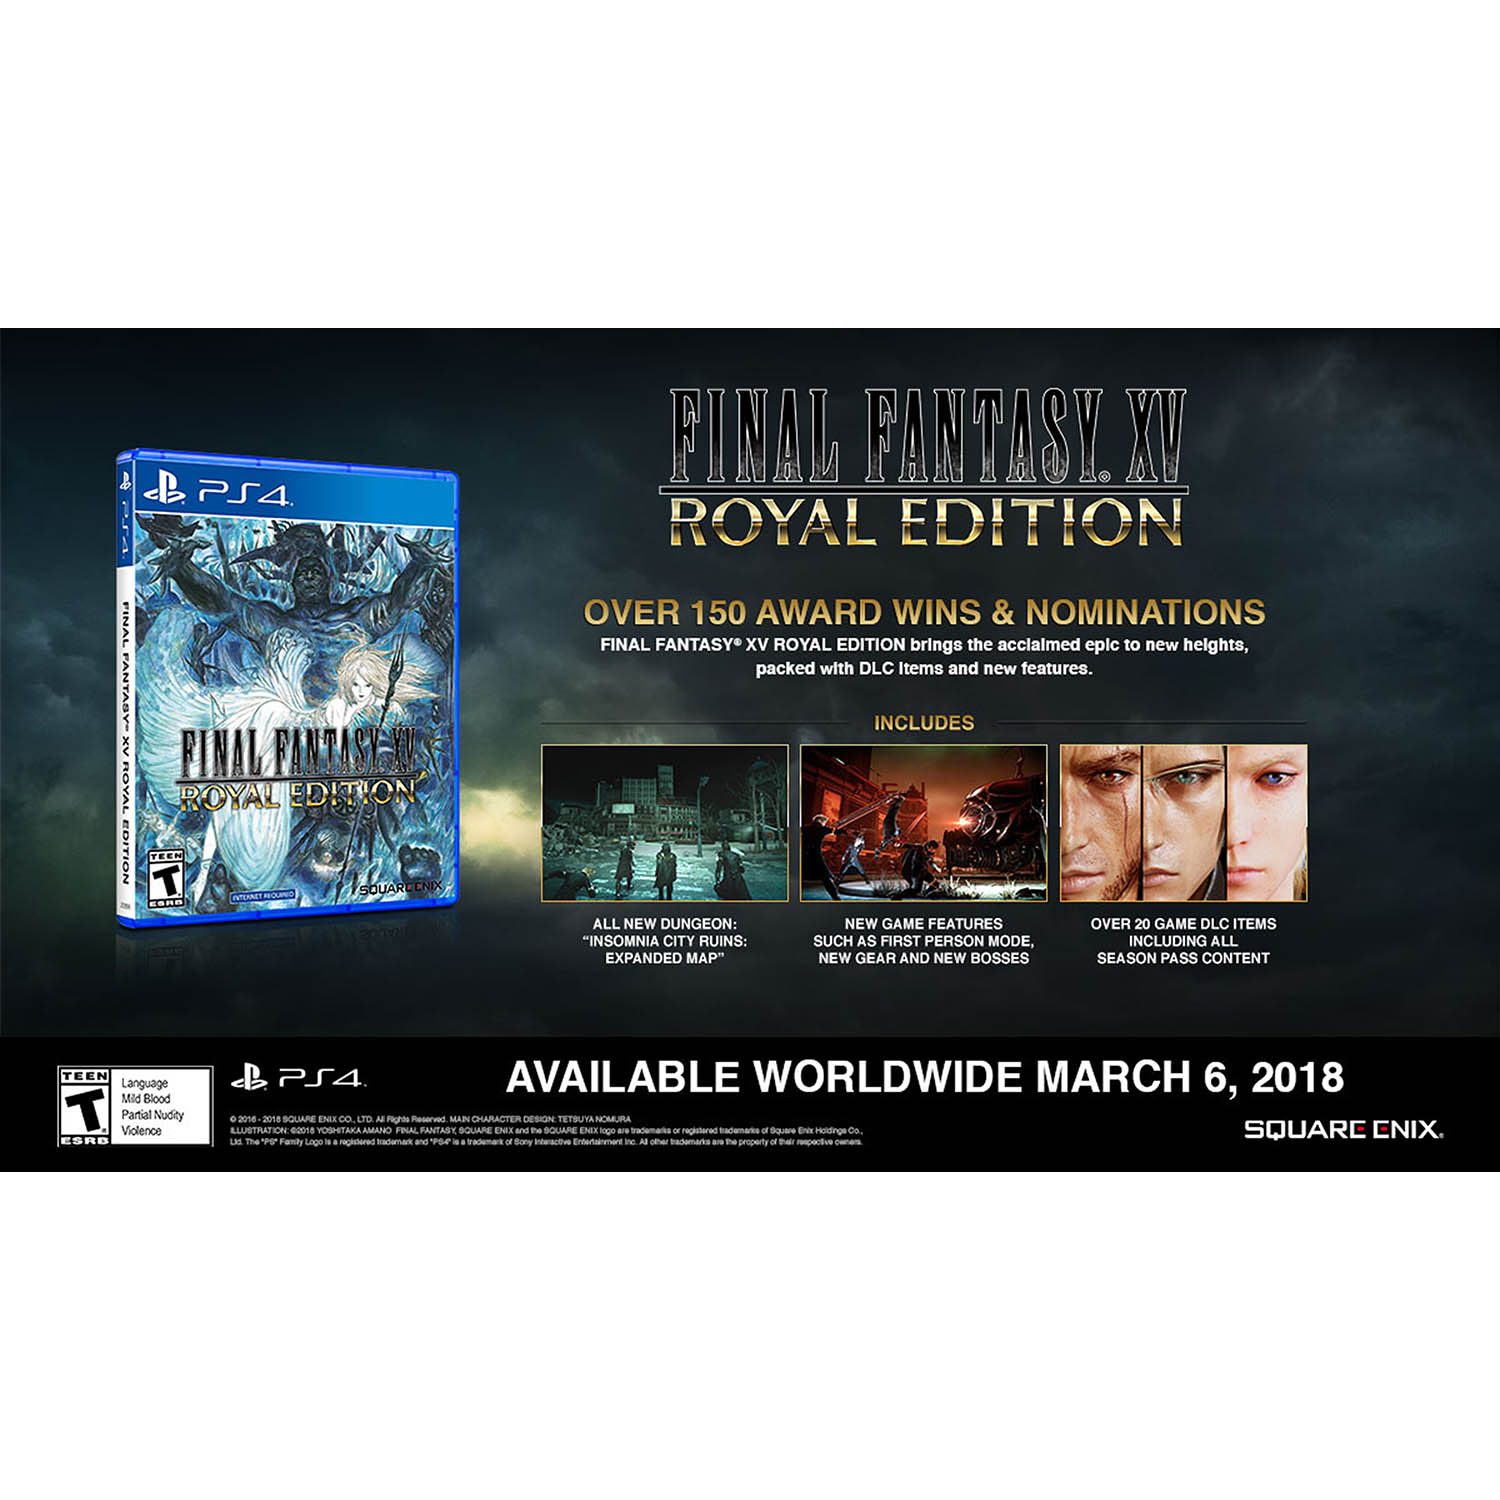 Final Fantasy XV Royal Edition, Square Enix, PlayStation 4, [Physical],  662248920764 